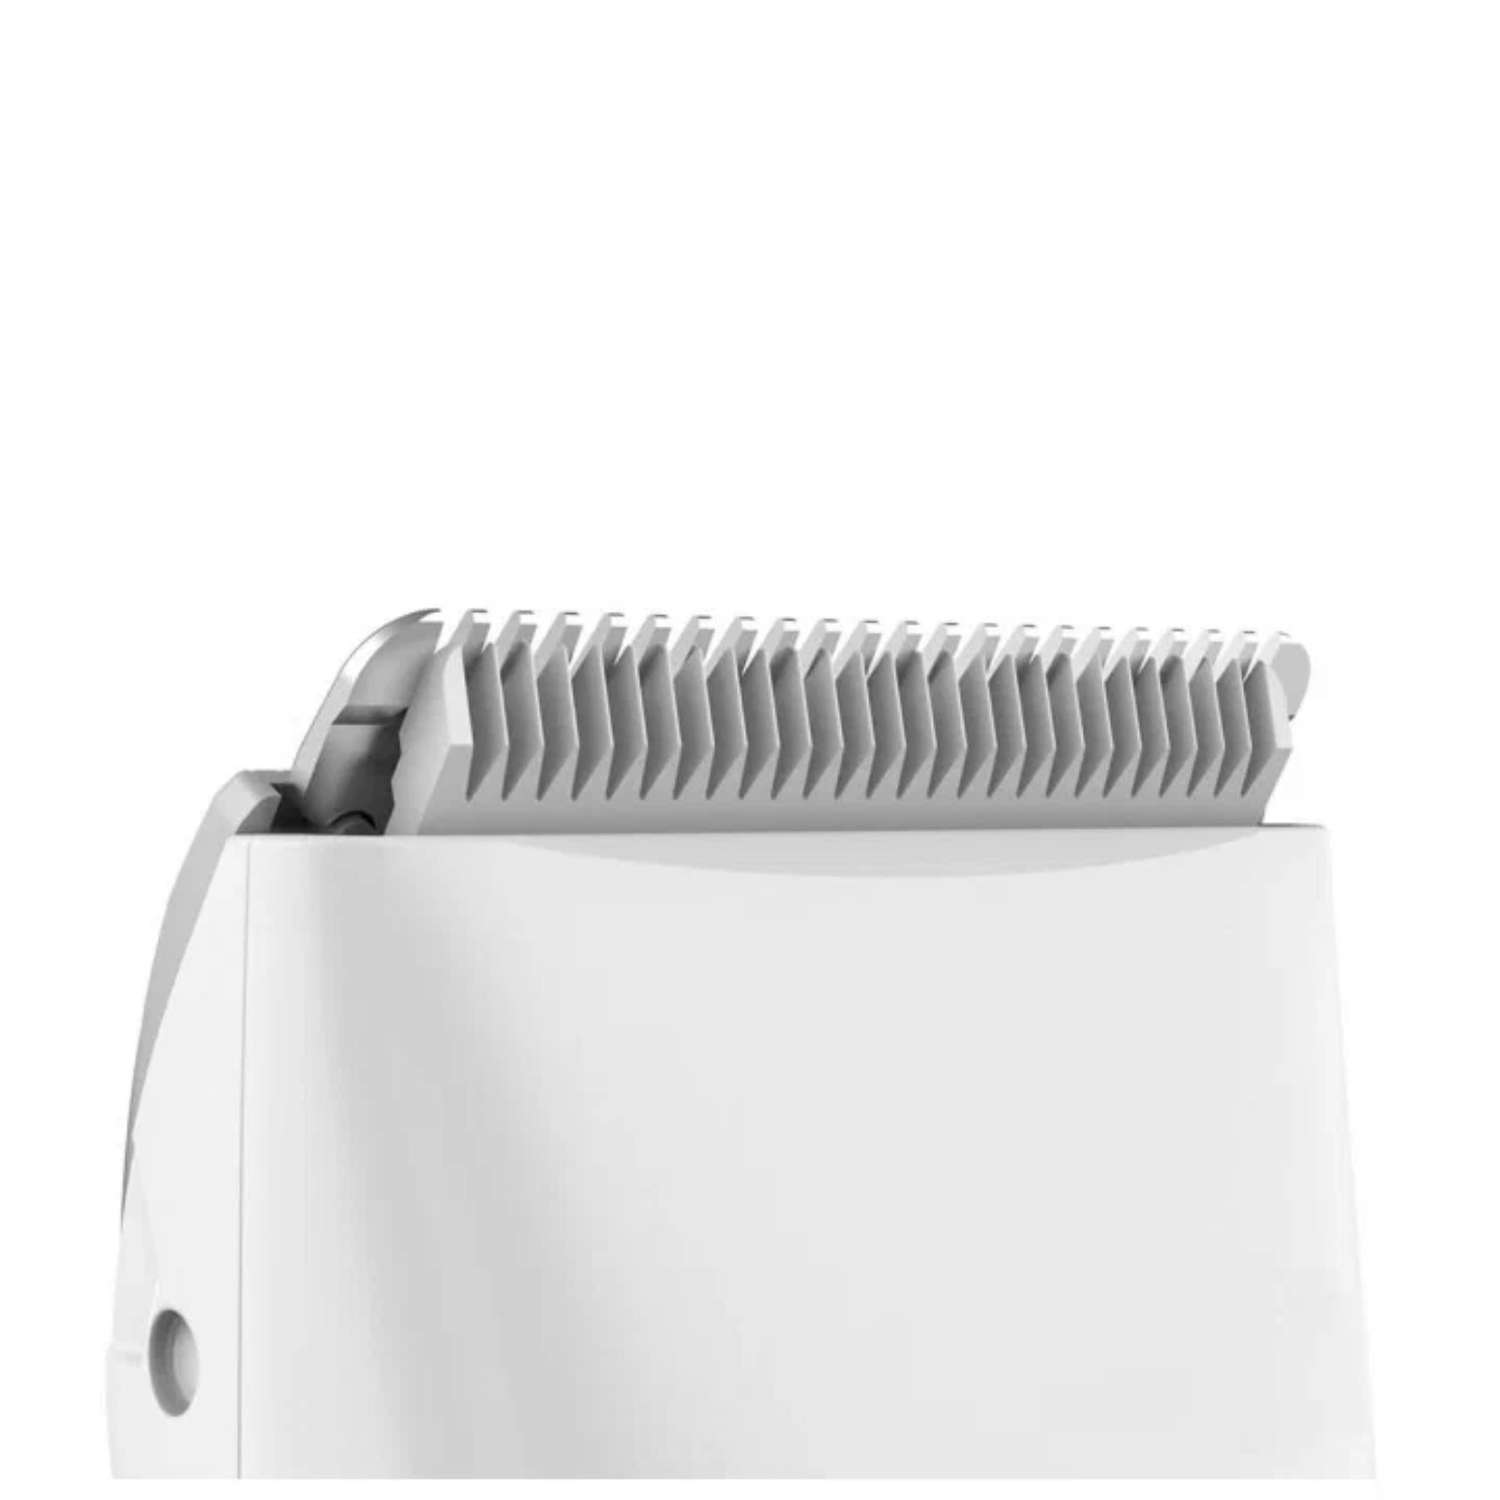 Машинка для груминга XIAOMI Pawbby Pet Hair Clippers MG-HC001A-EU 5 В керамика АКБ белая - фото 3